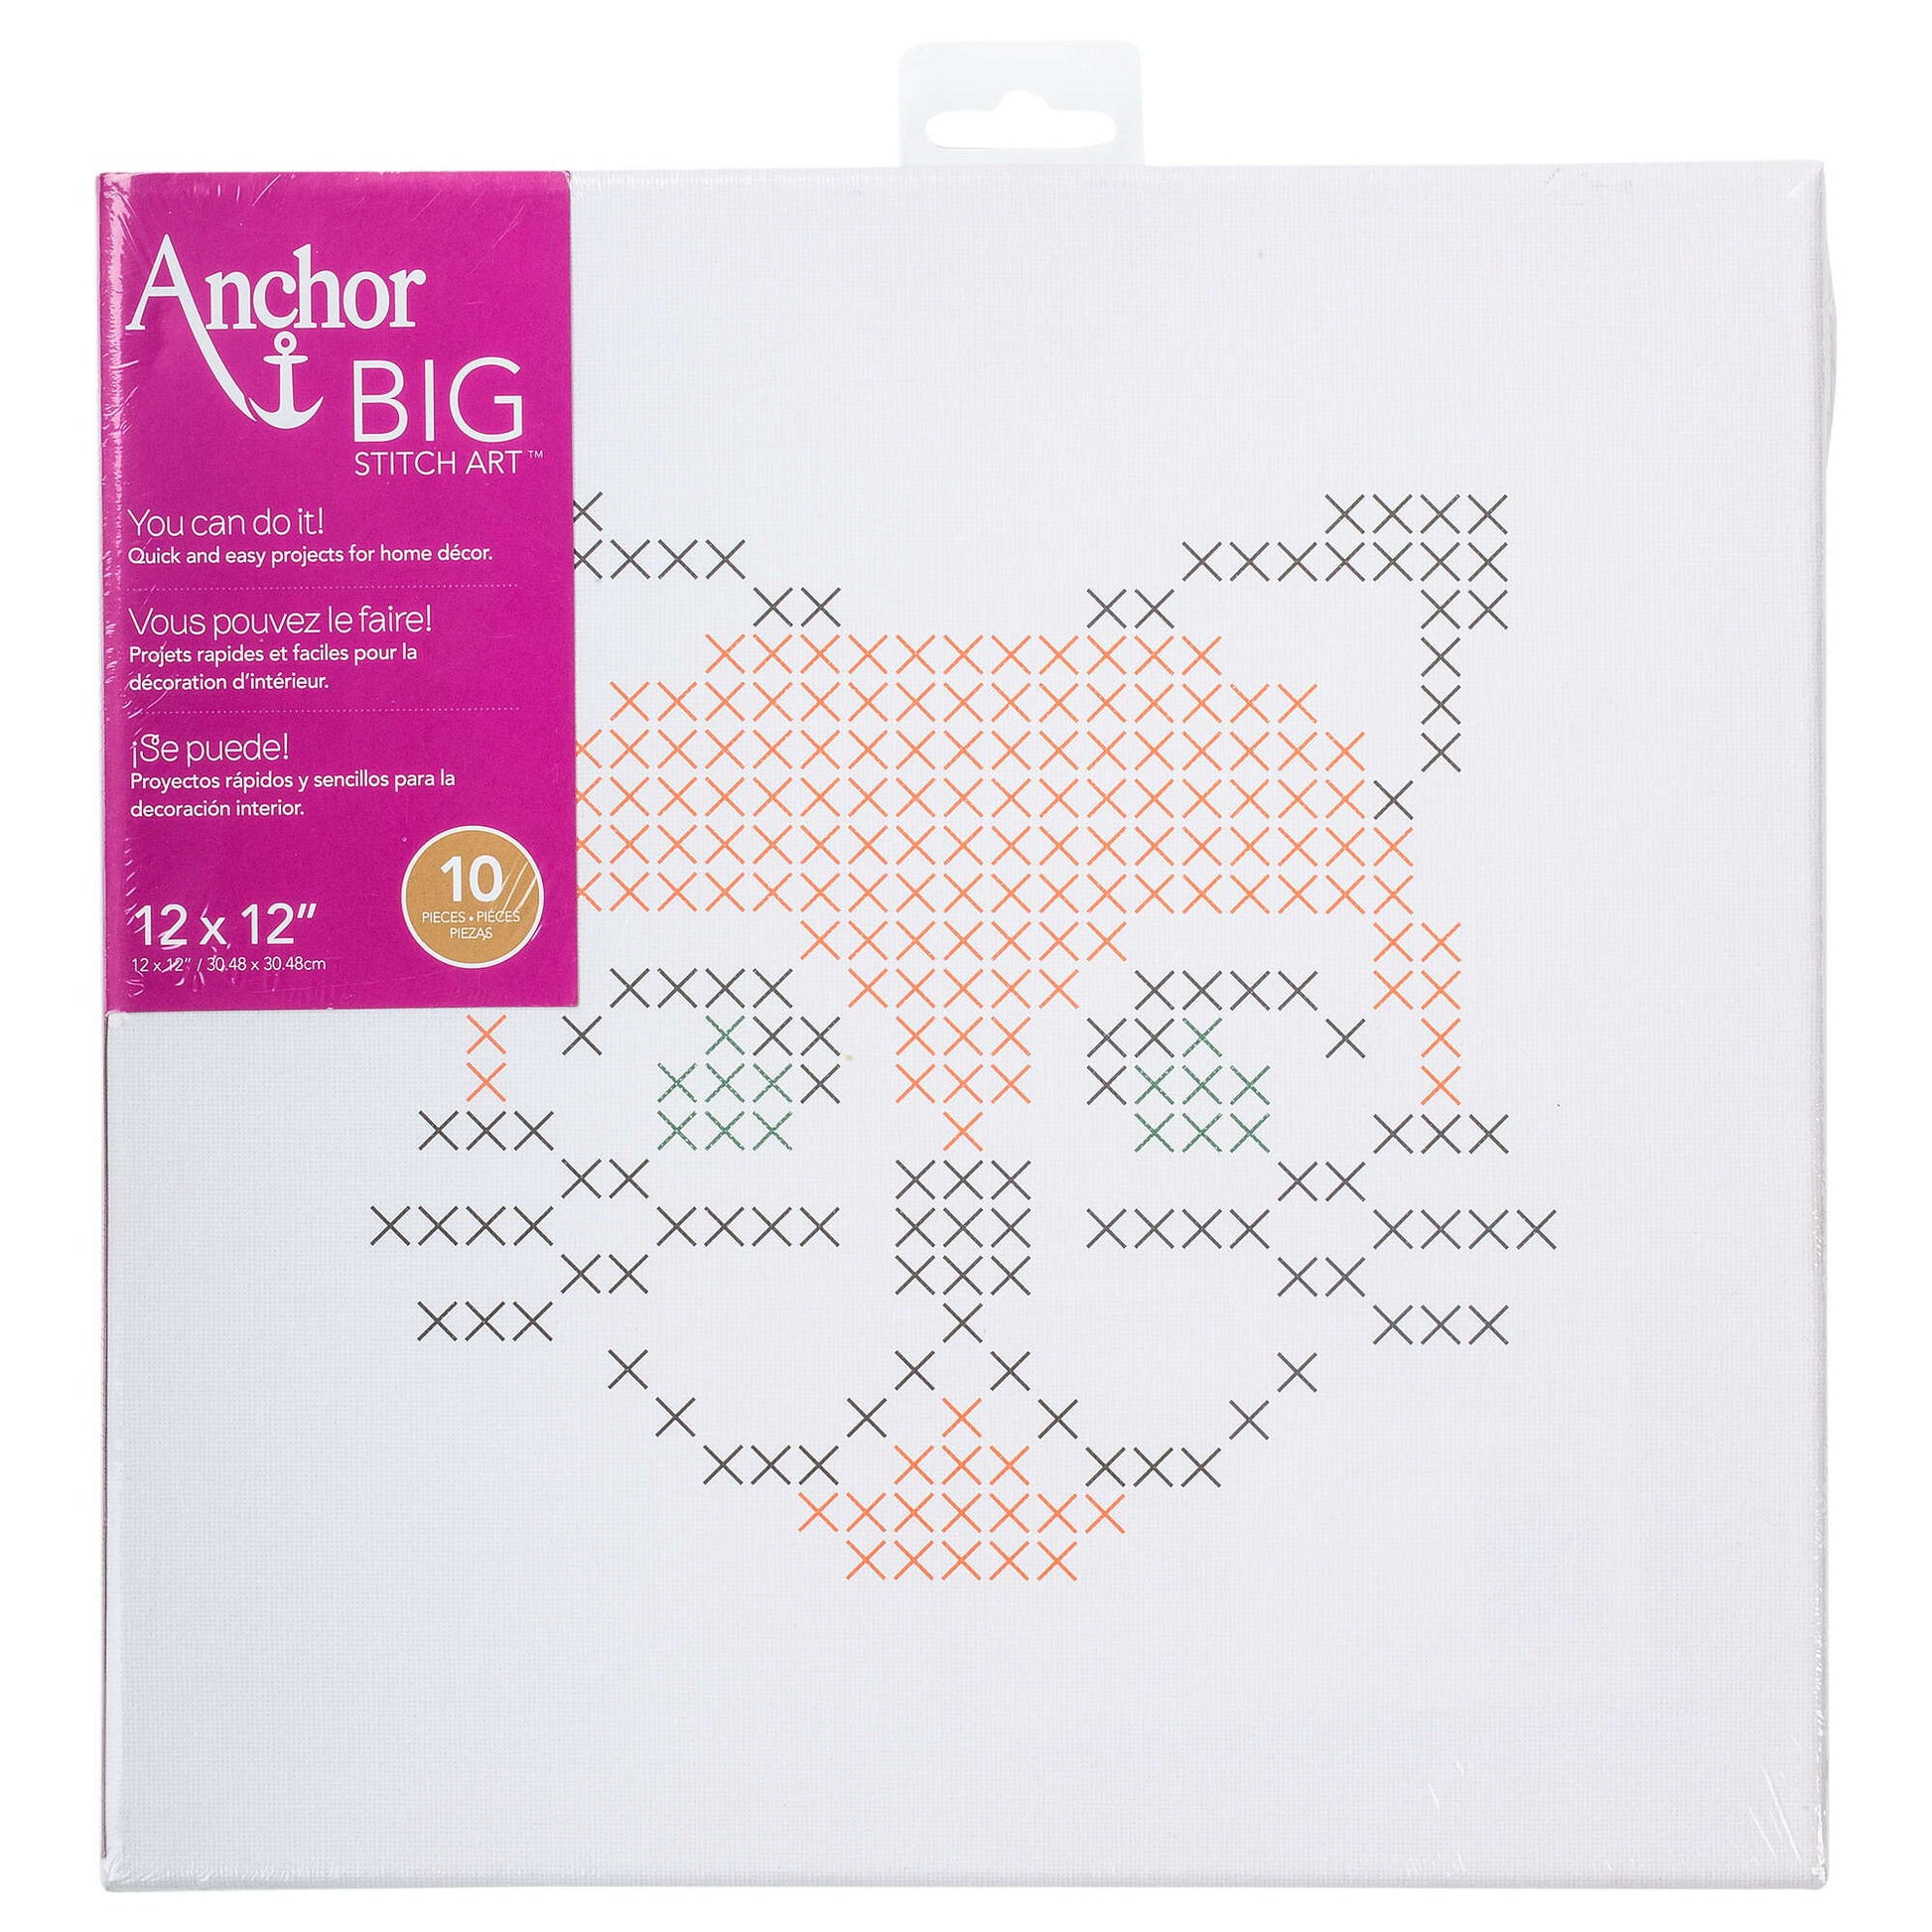 Anchor Big Stitch Art 12" x 12" - Discontinued Items Cat